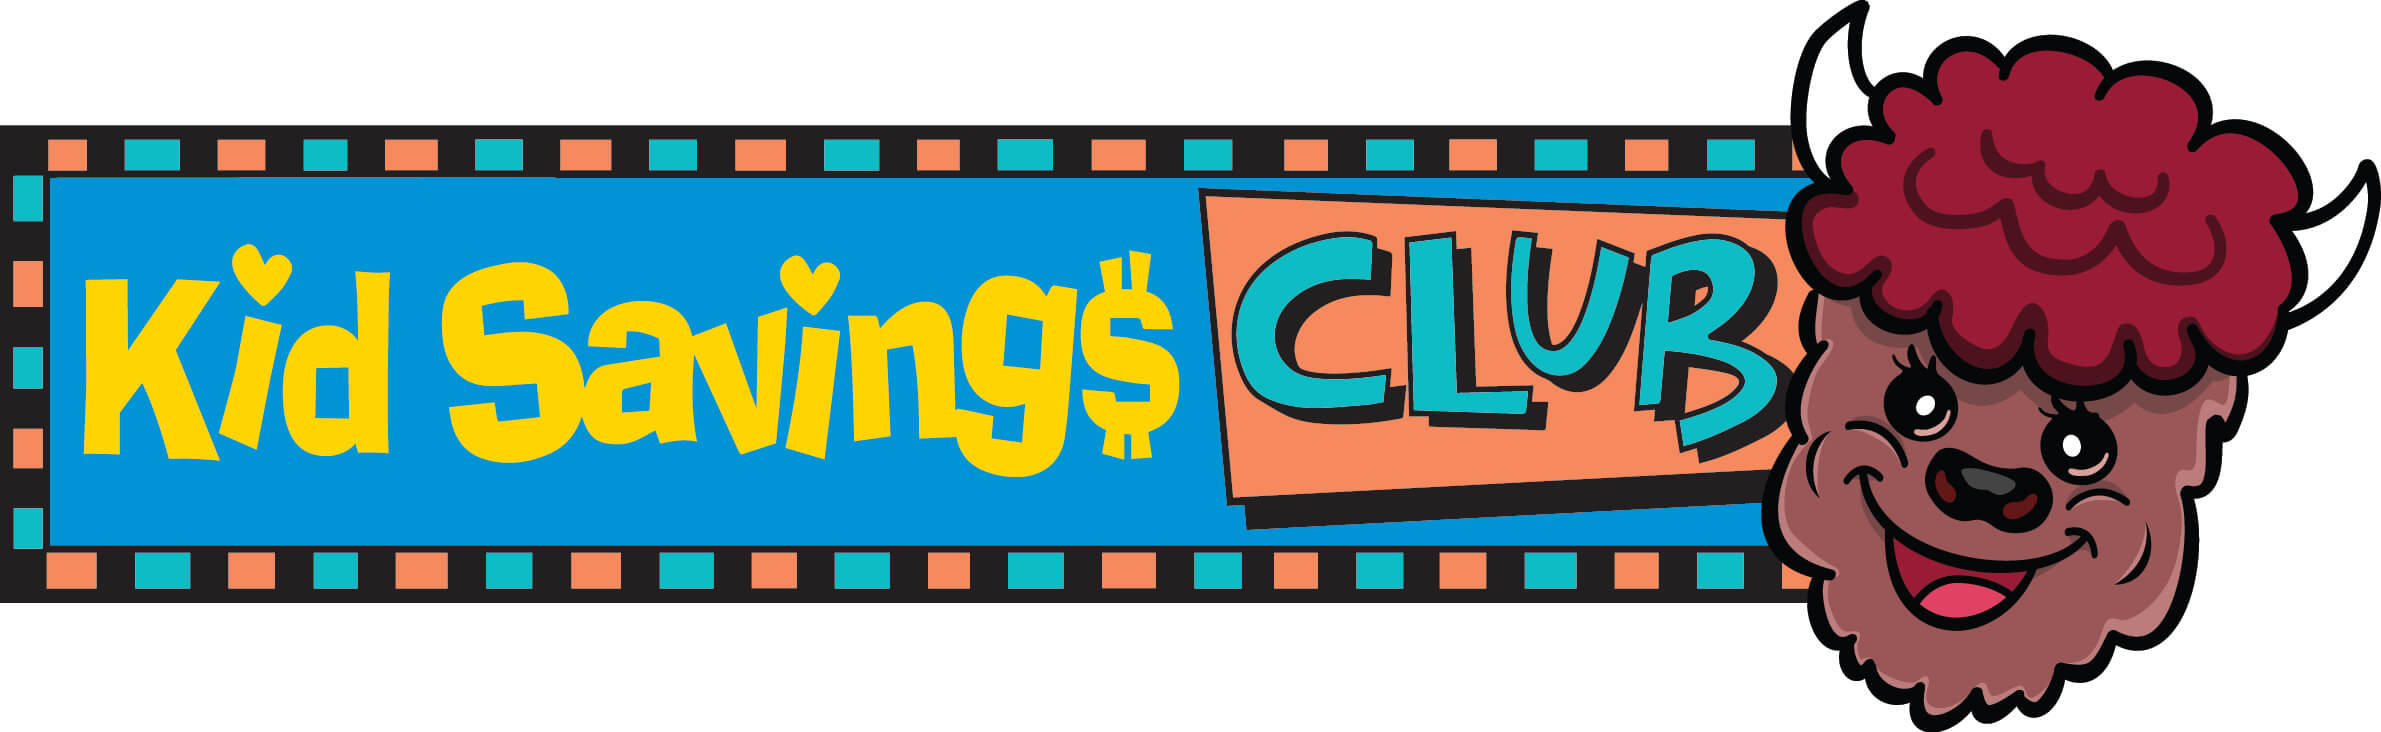 Bobby the Buffalo Kids Savings Club logo